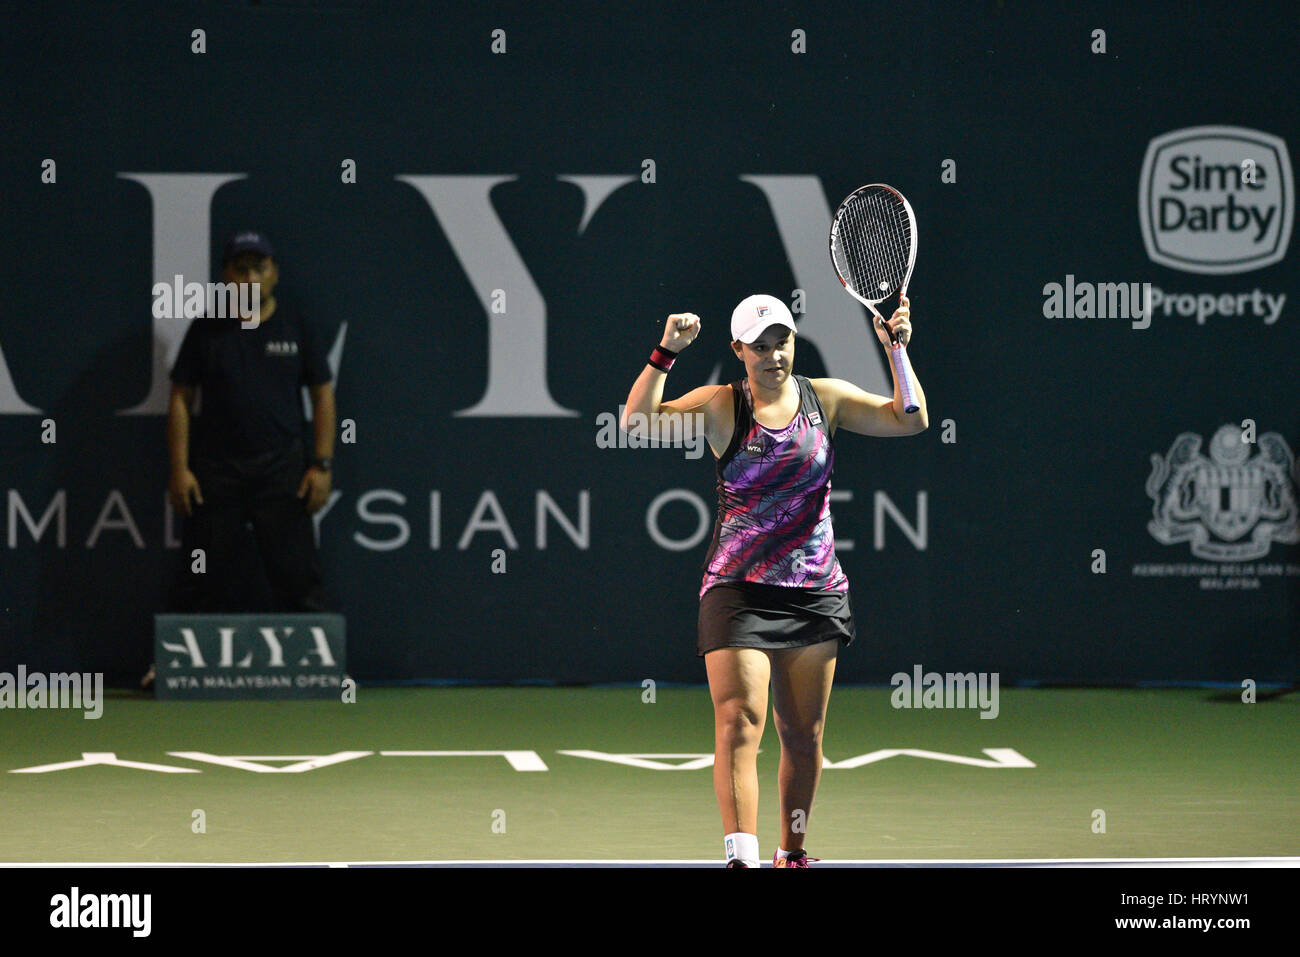 KUALA LUMPUR - März 5: Ashleigh Barty(L) von Australien feiern ihr Sieg im Endspiel der WTA ALYA Malaysian Open 2017 bei TPCKL, Kuala Lumpur, Malaysia am 3. März 2017 Stockfoto